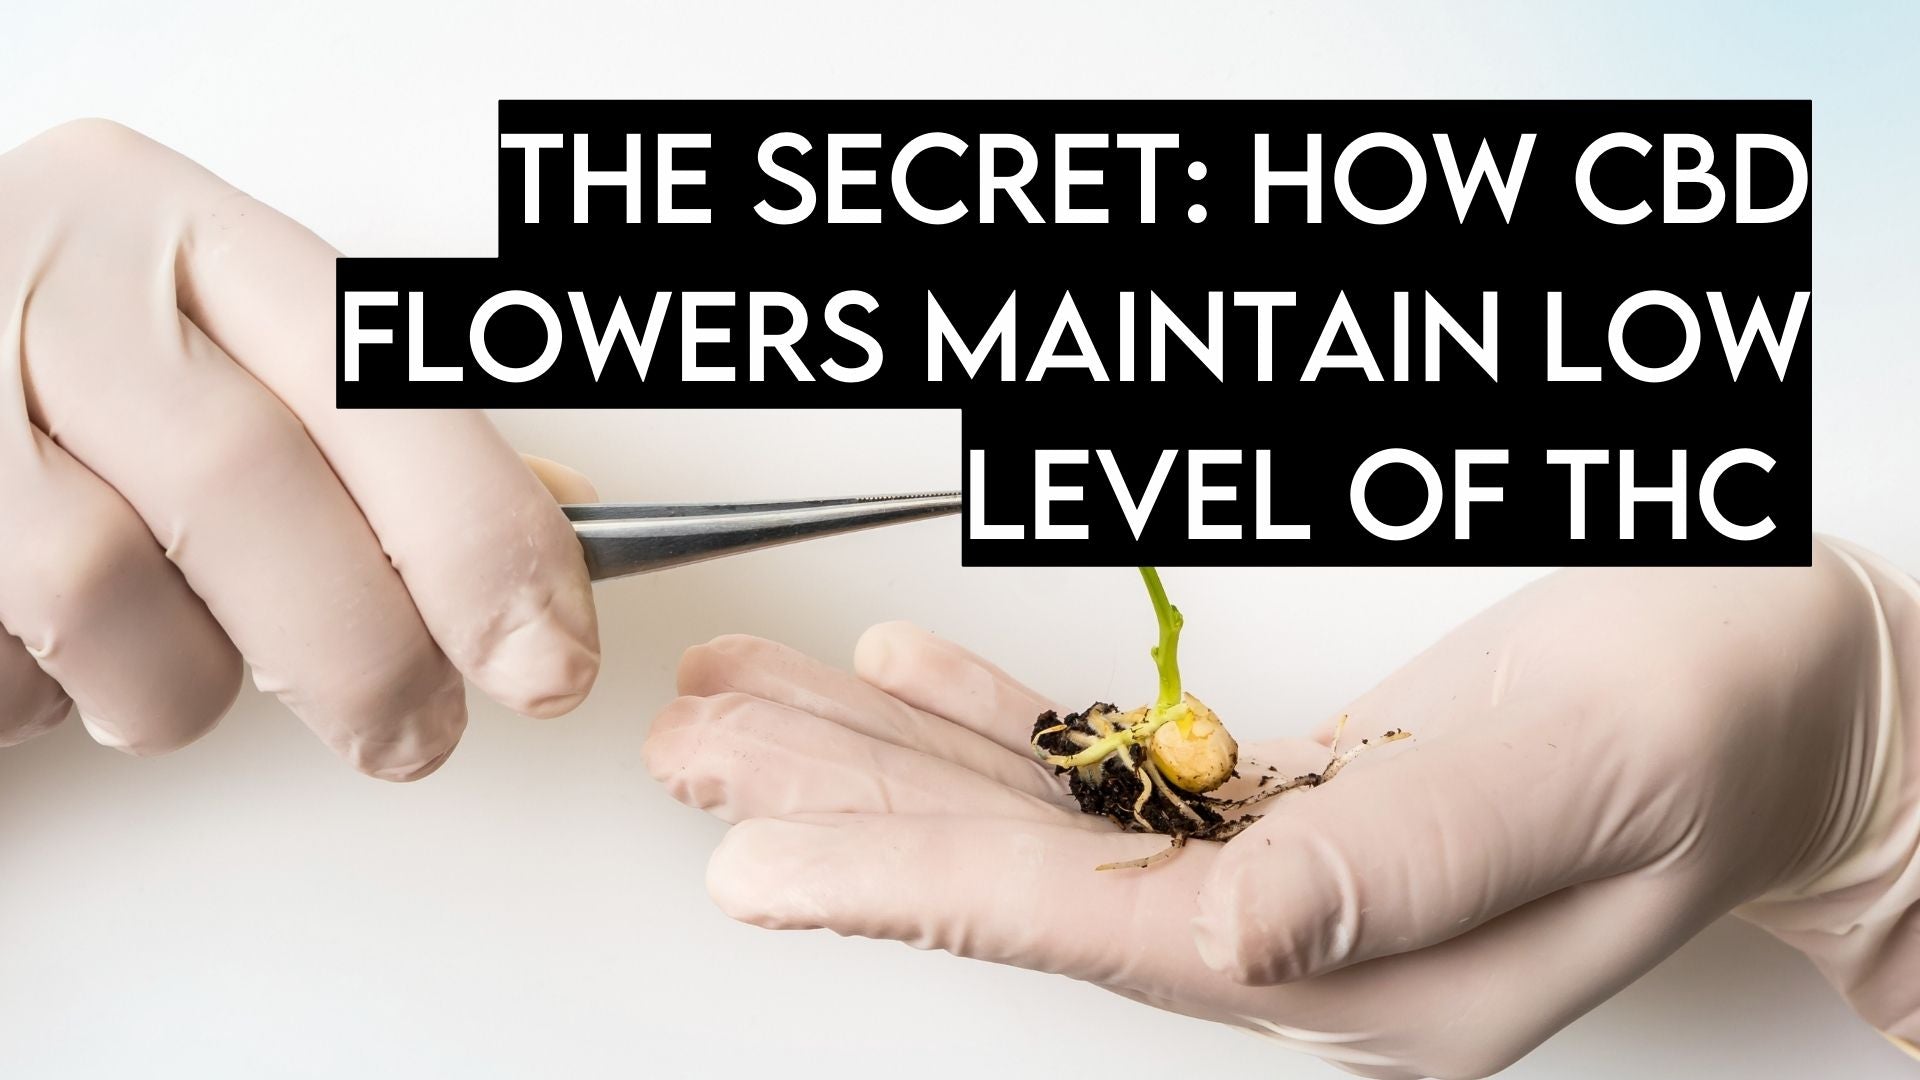 The Secret Revealed: How CBD Flowers Keep THC Levels Low